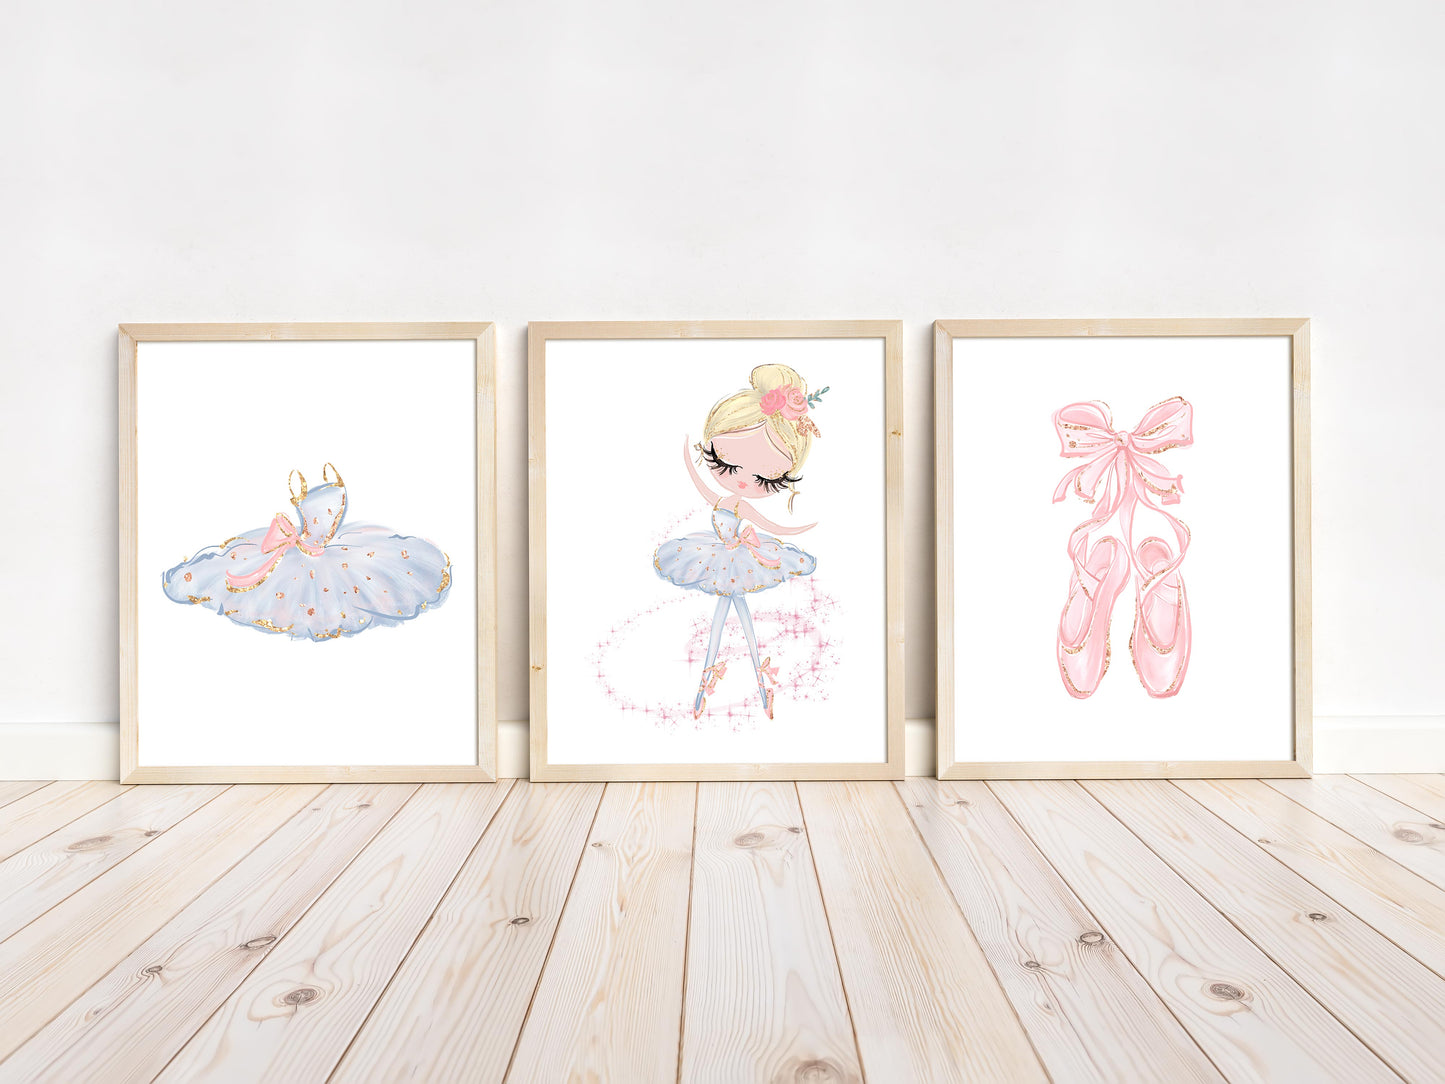 3 PRINTABLE Ballerina  Wall Art, Ballet Nursery Prints - Sweet Ballet